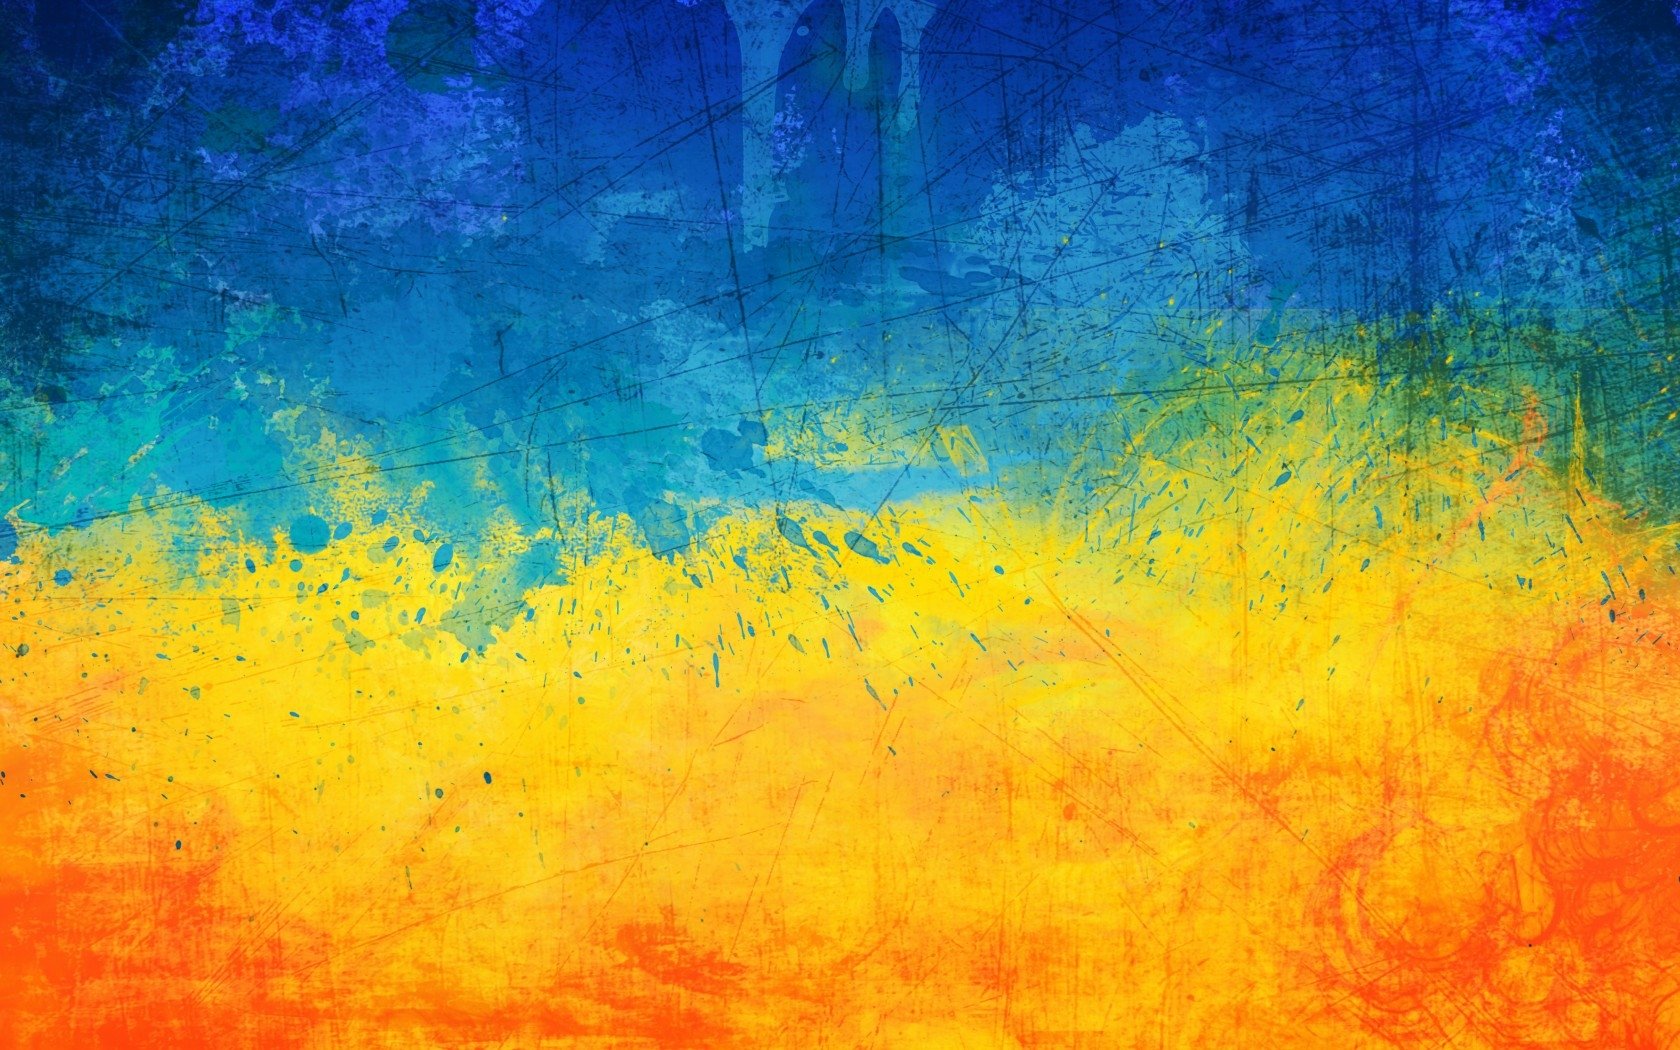 Download wallpapers Flag of Ukraine 4k grunge art rhombus grunge  texture Ukrainian flag Europe national symbols Ukraine creative art  for desktop with resolution 3840x2400 High Quality HD pictures wallpapers